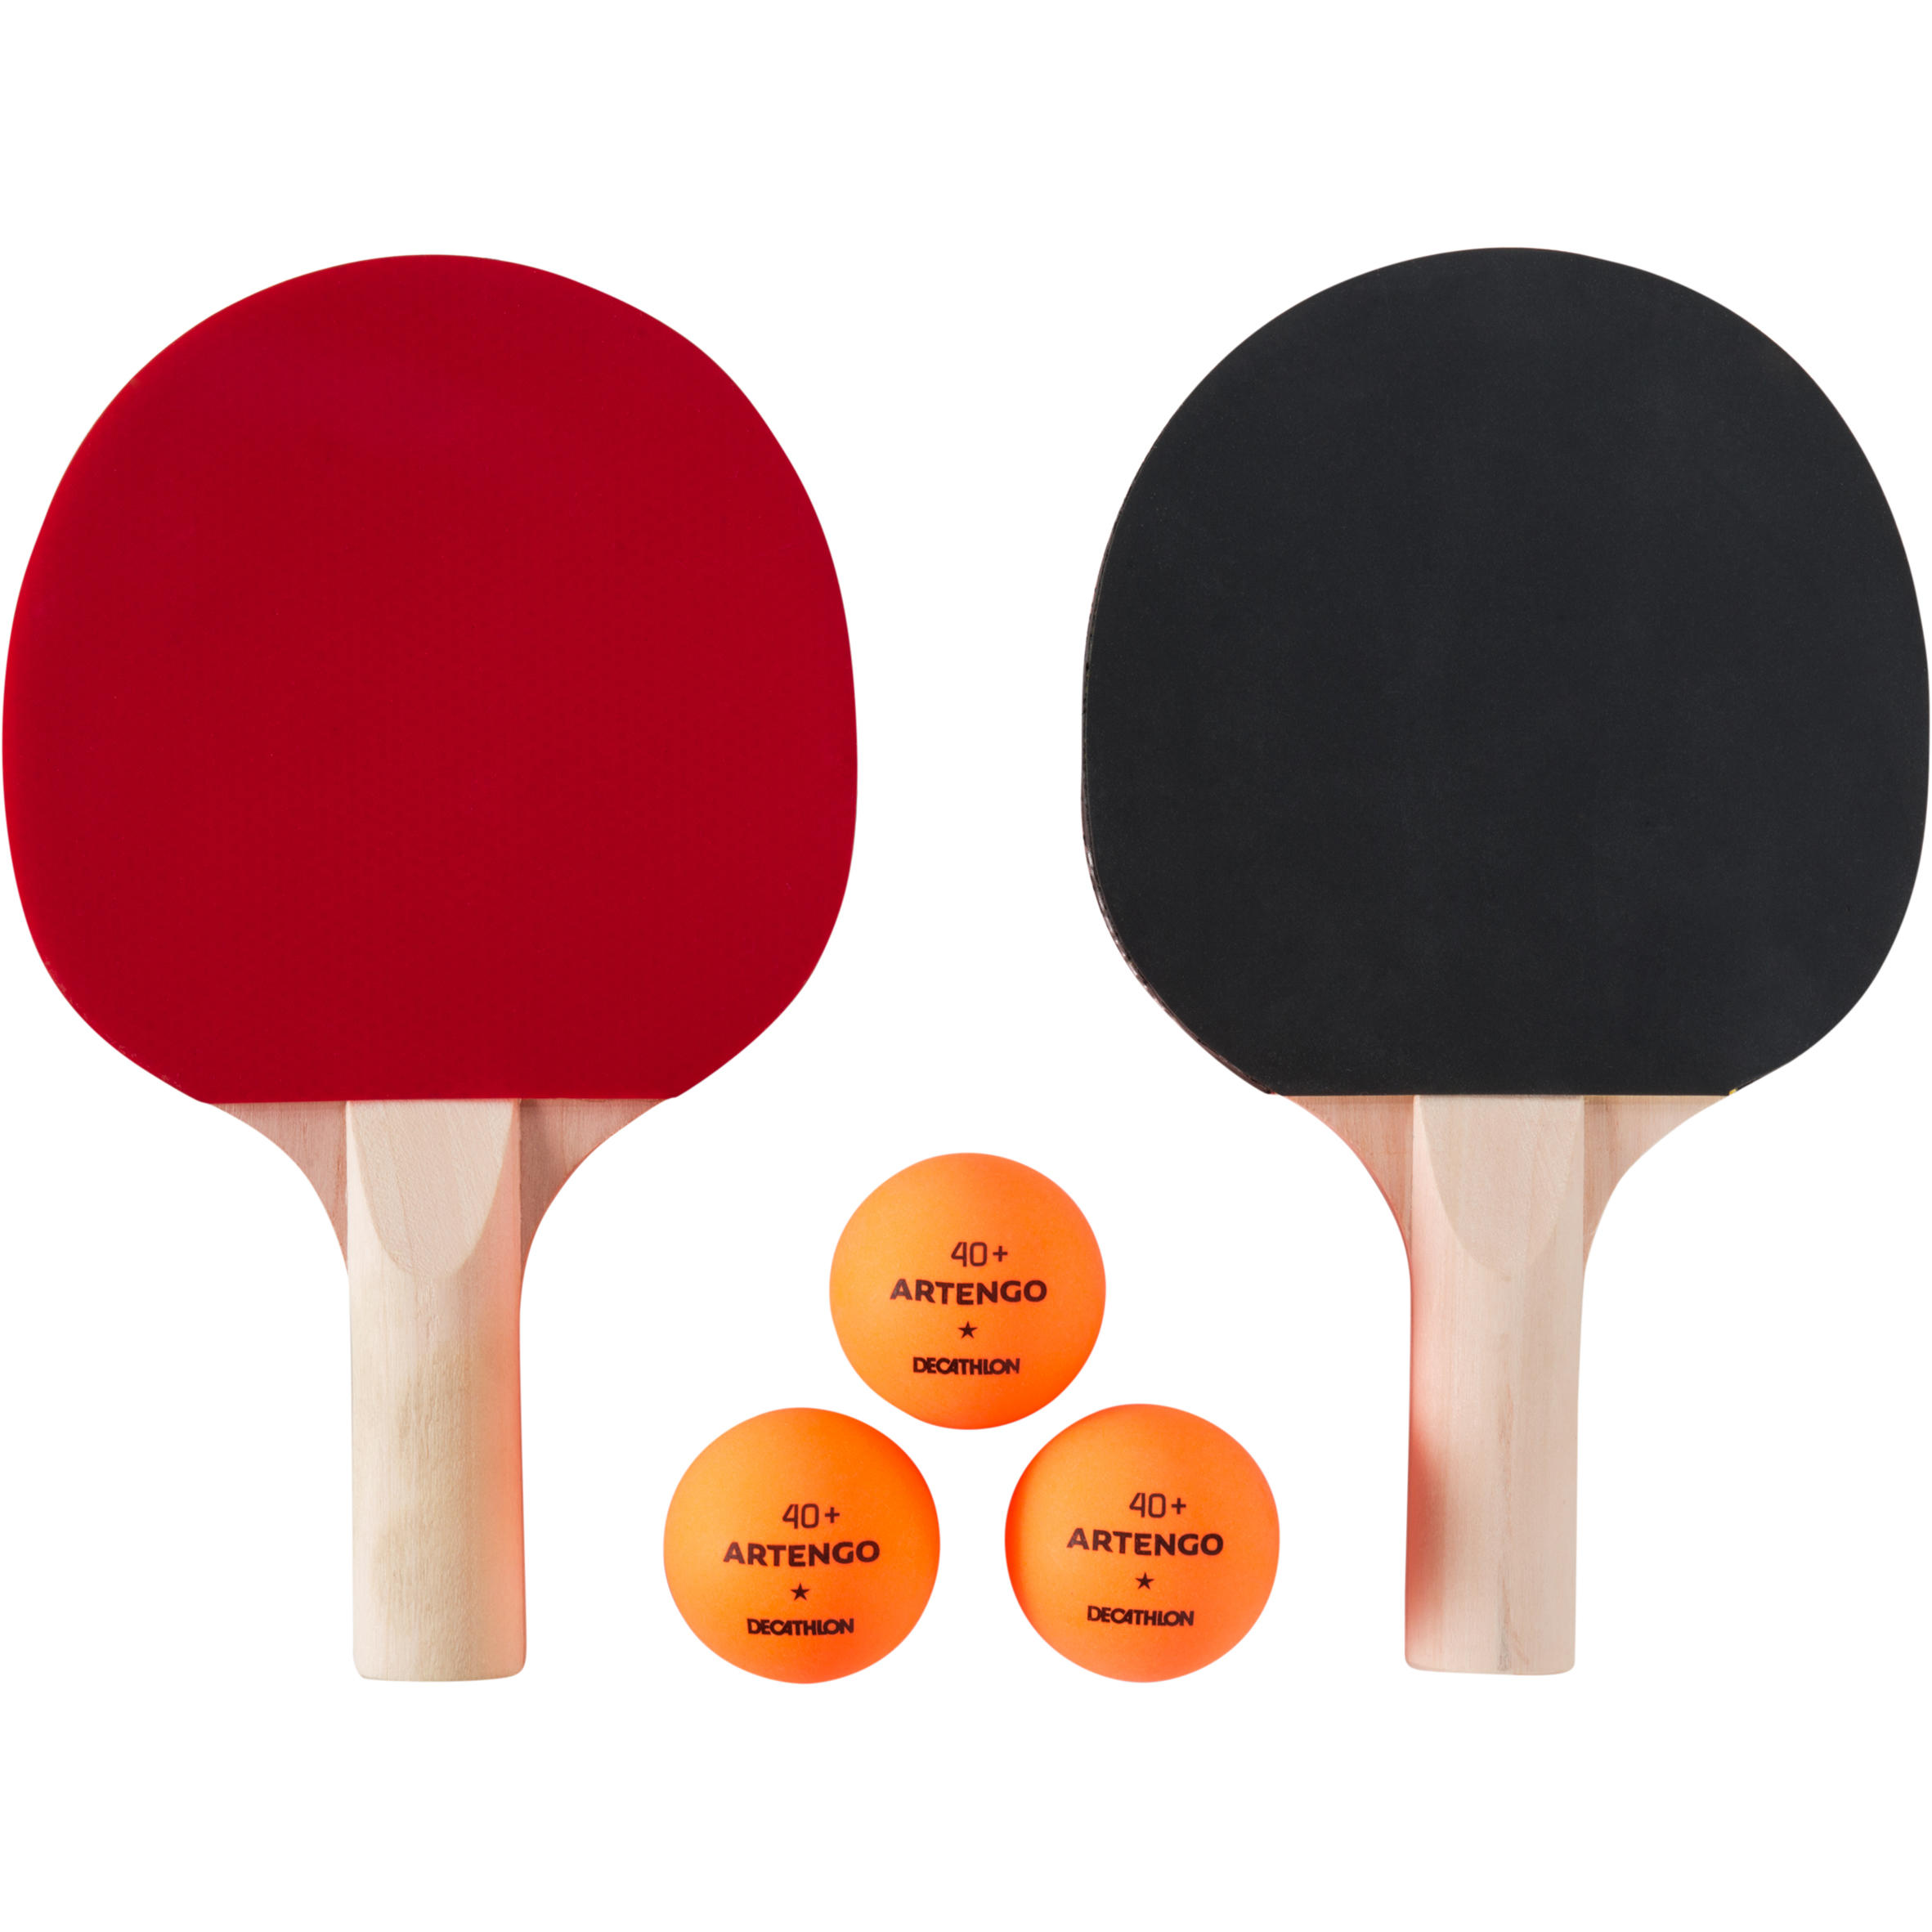 Table Tennis Bats/Rackets and Balls Buy 